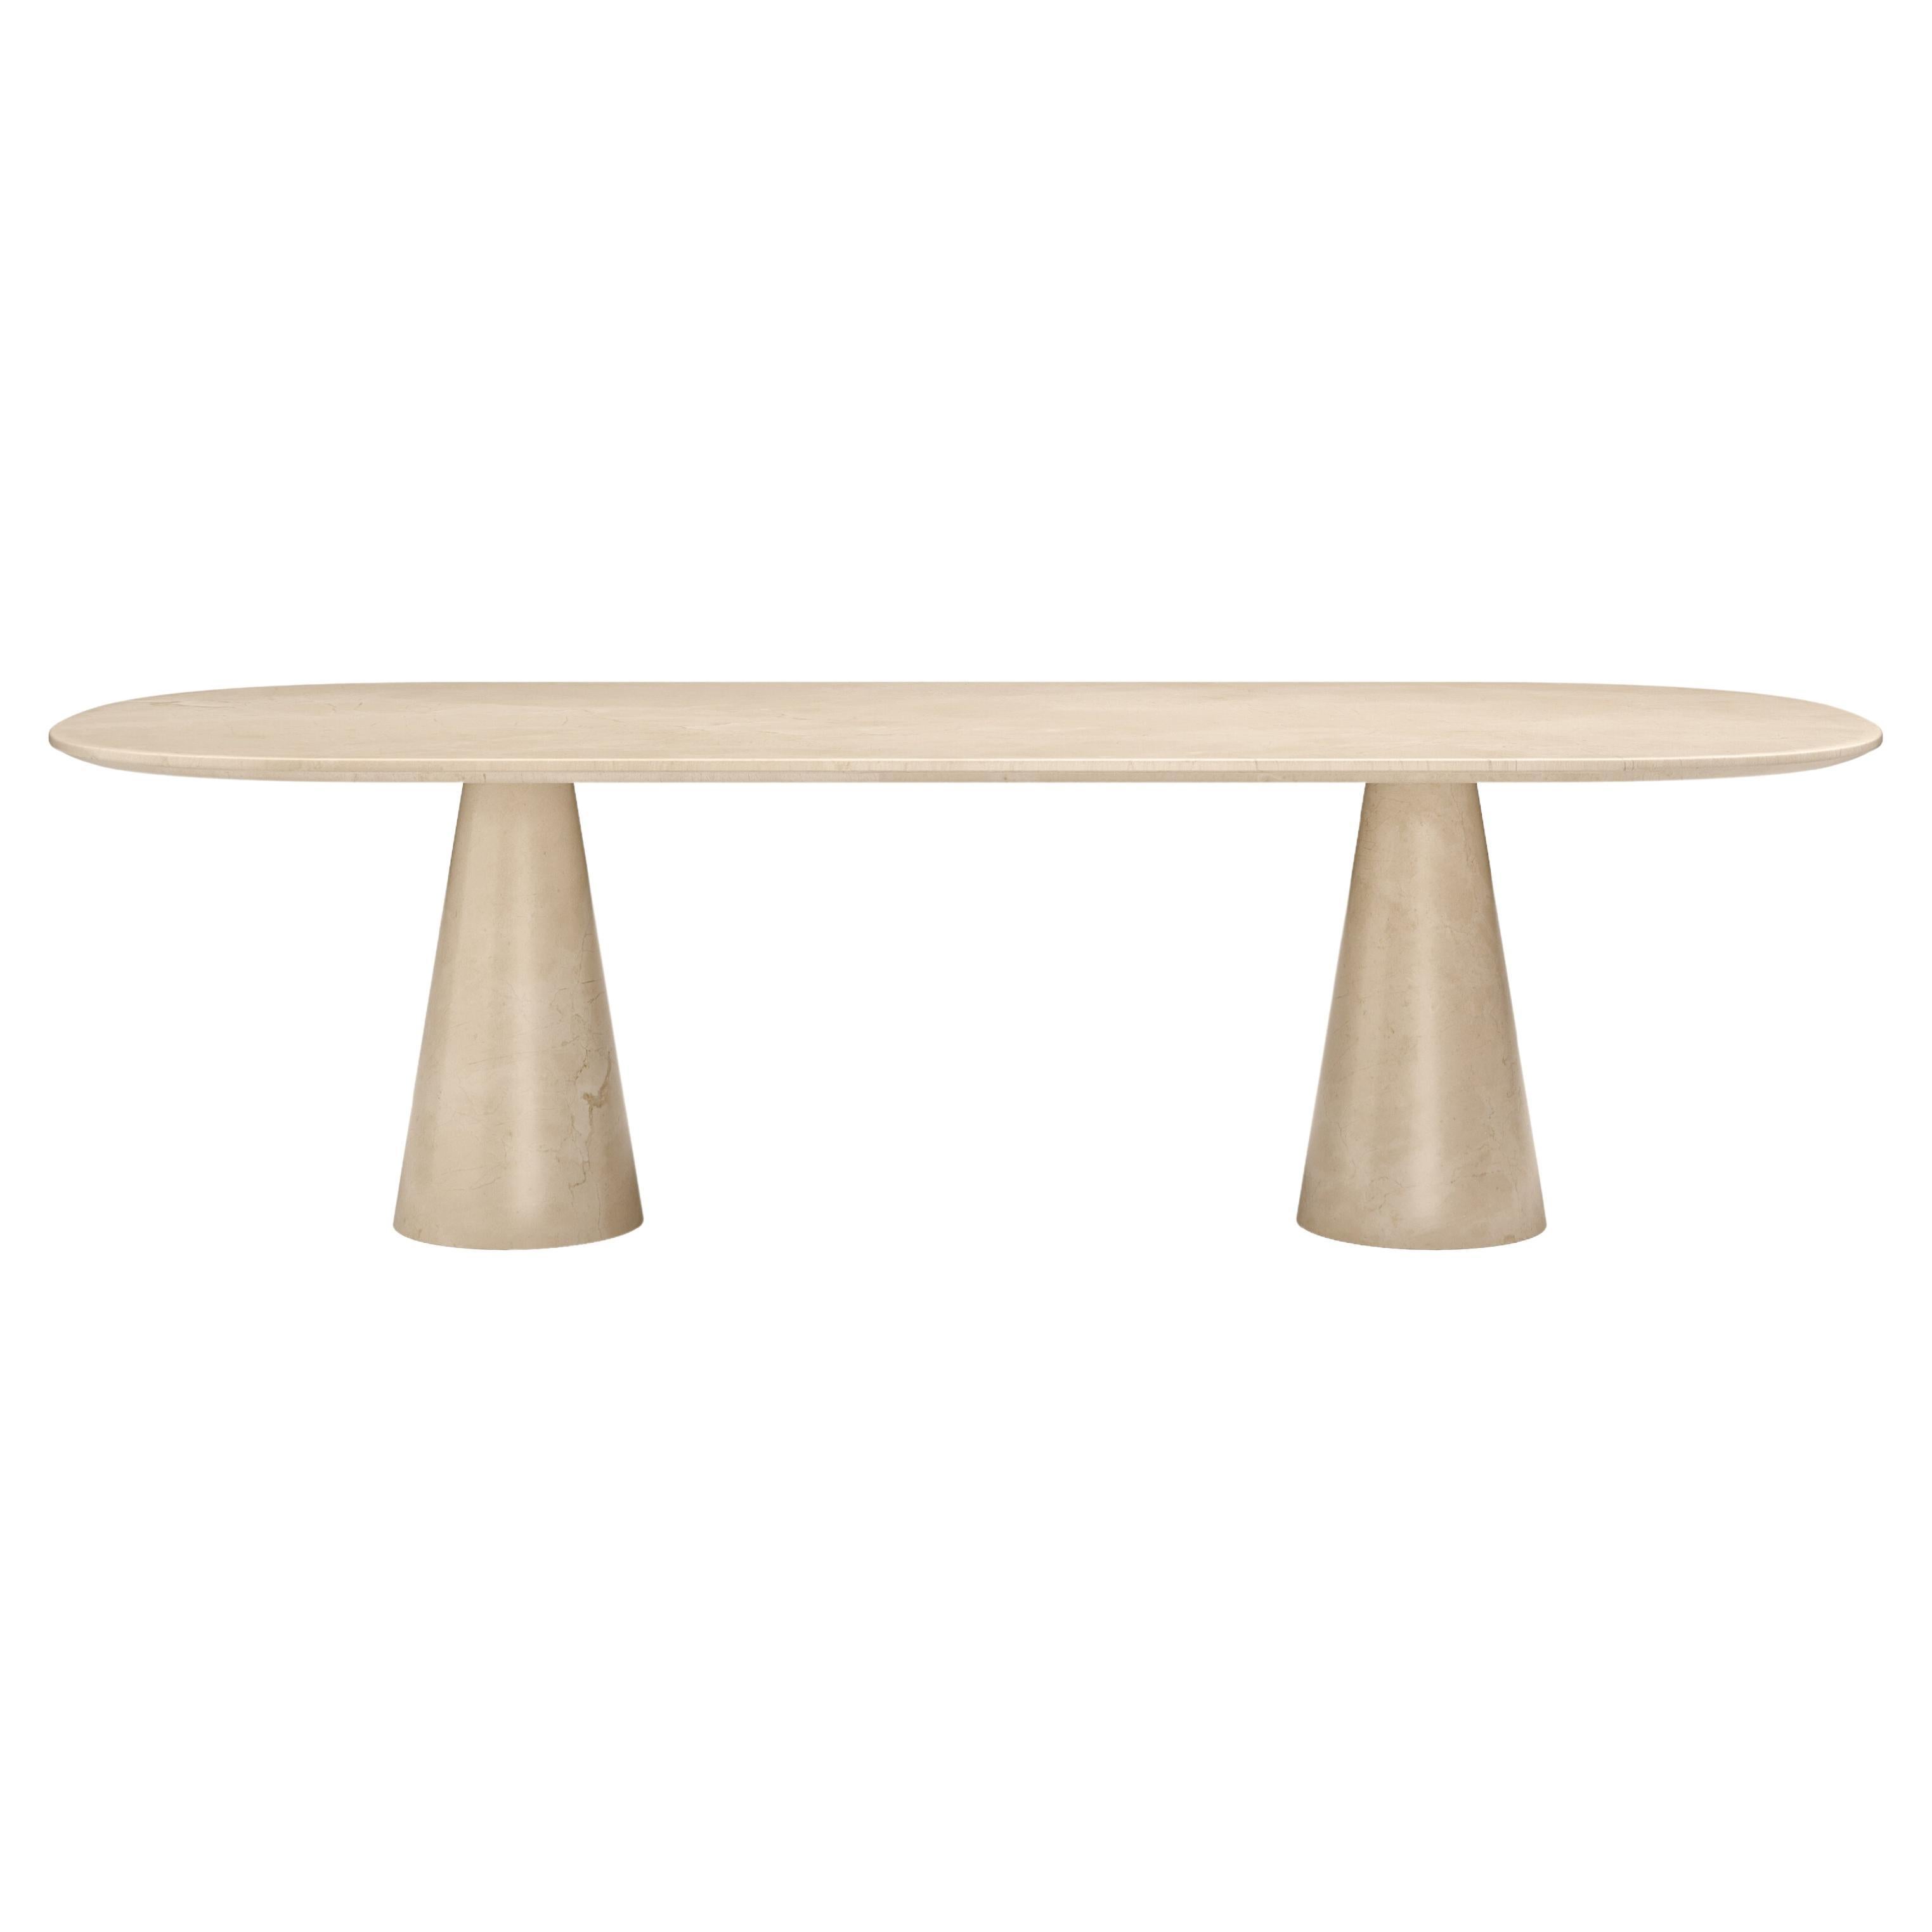 FORM(LA) Cono Oval Dining Table 118”L x 48”W x 30”H Crema Marfil Marble For Sale